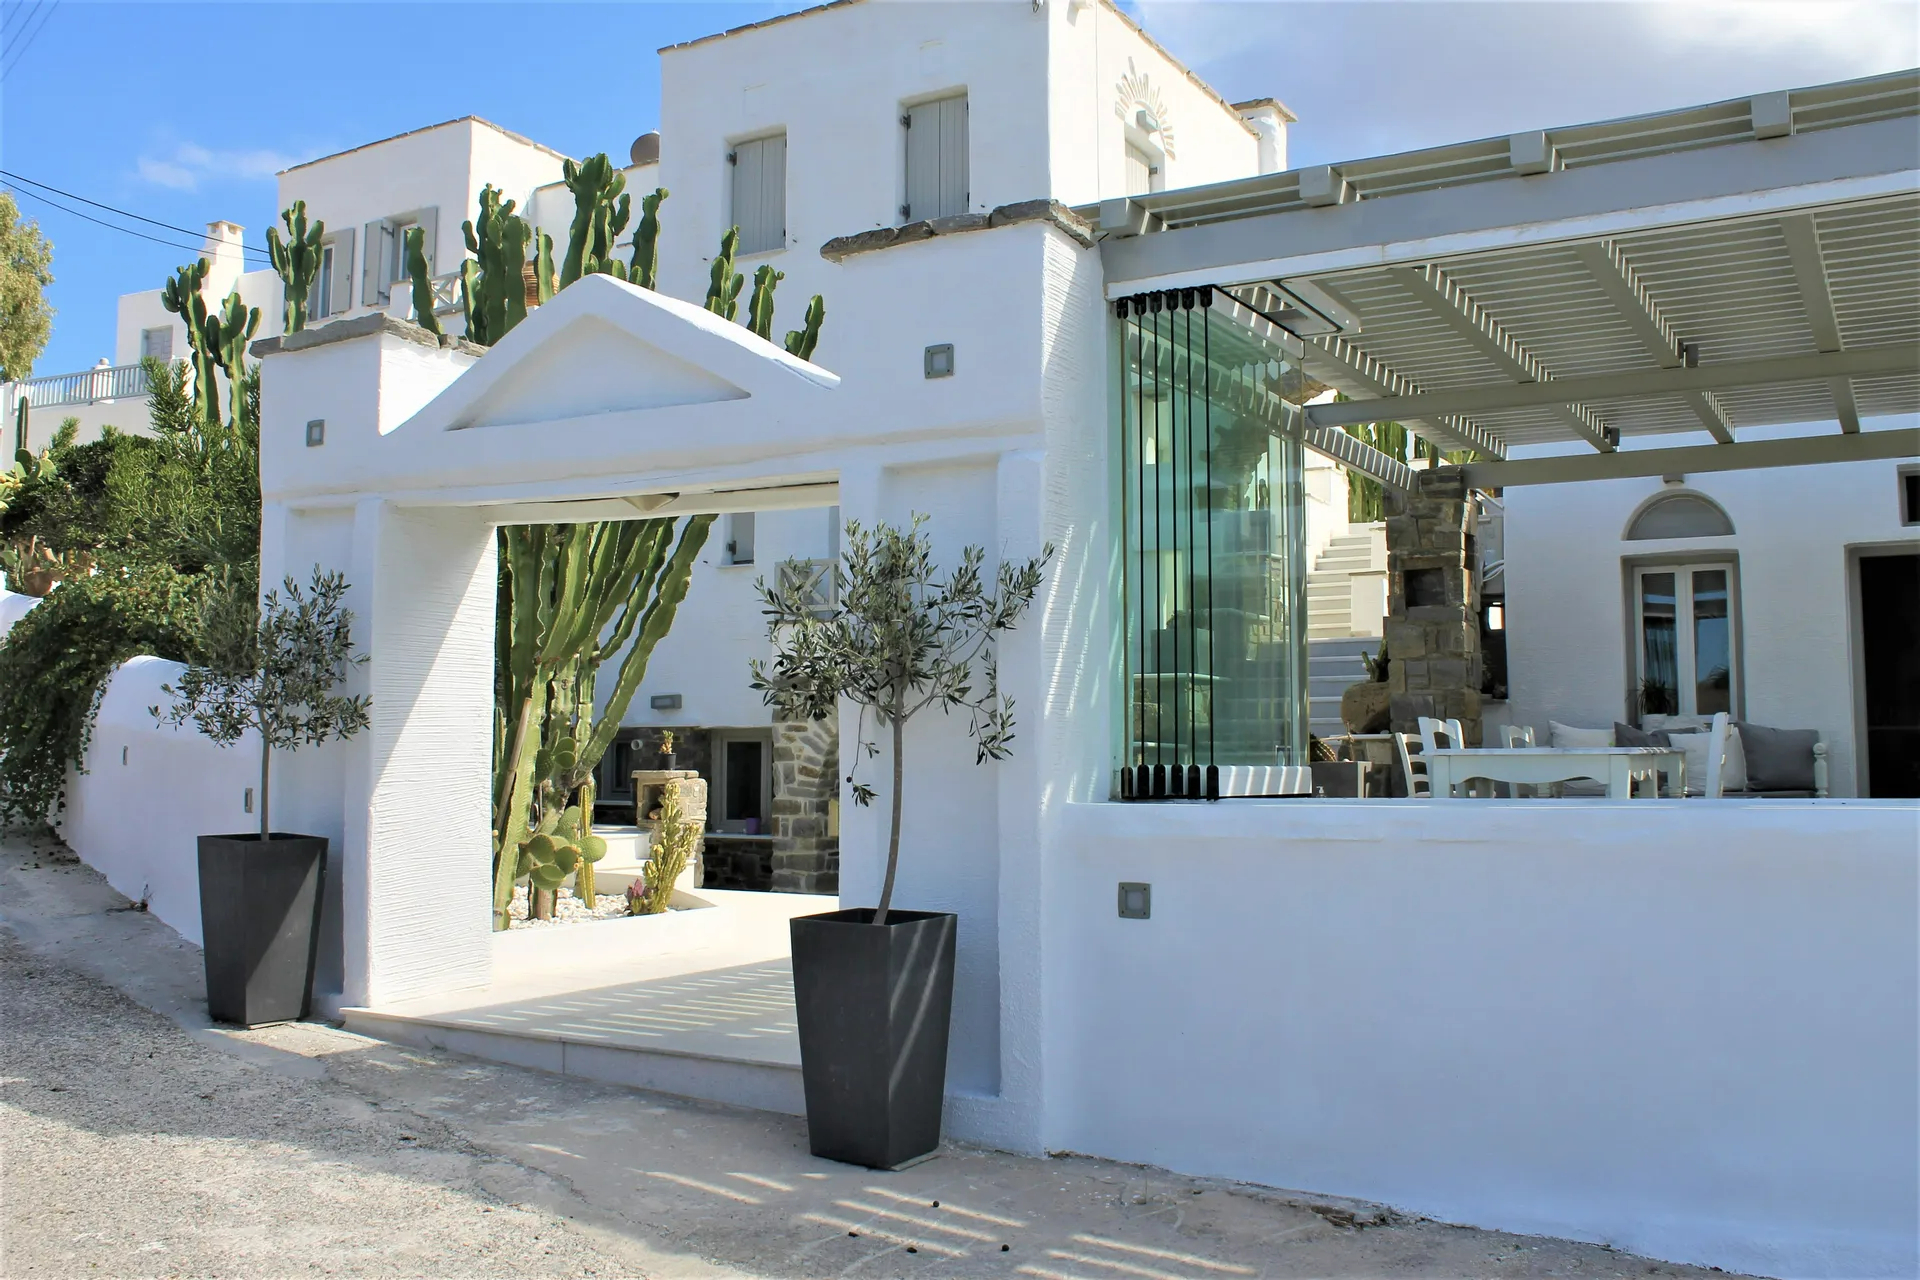 Parian Lithos Residence - Νάουσα, Πάρος ✦ 4 Ημέρες (3 Διανυκτερεύσεις) ✦ 2 άτομα ✦ 2 ✦ έως 30/09/2022 ✦ Δίπλα στην παραλία!